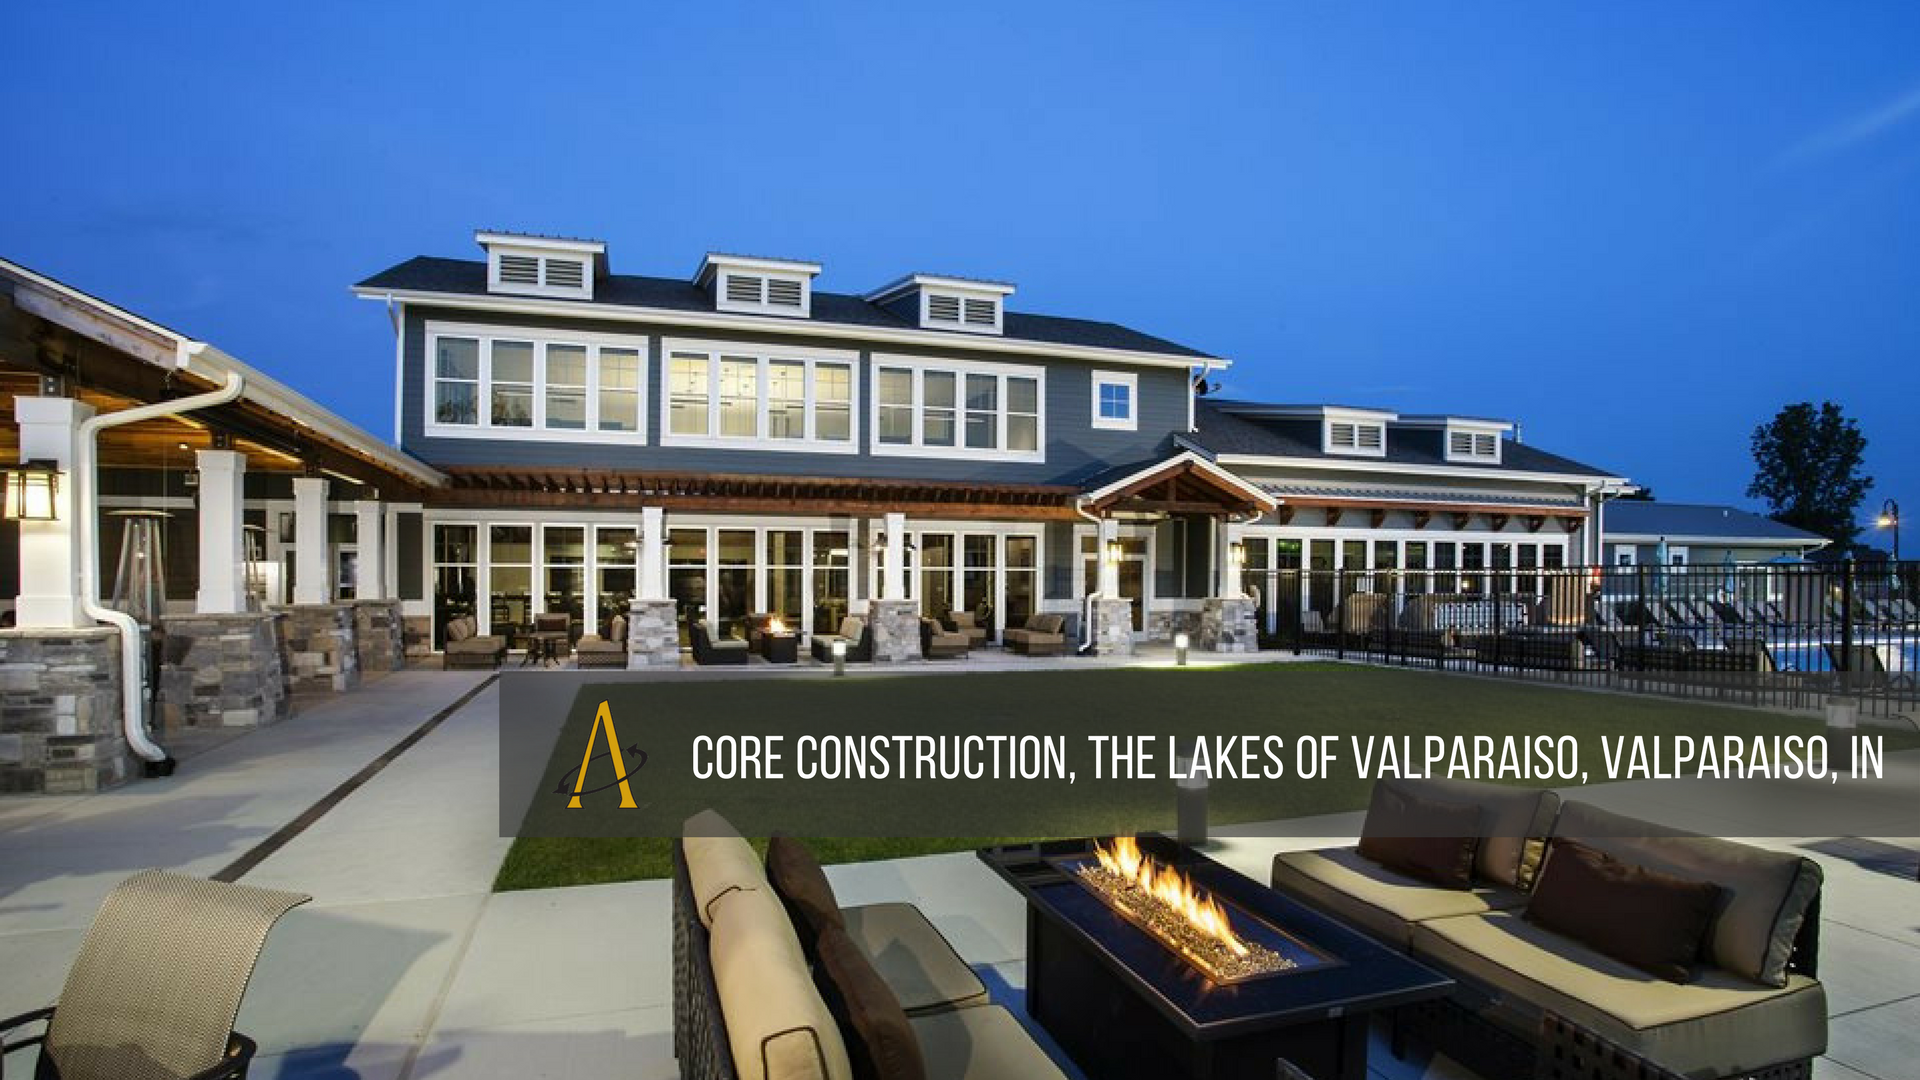 Core Construction, The Lakes of Valparaiso, Valparaiso, IN